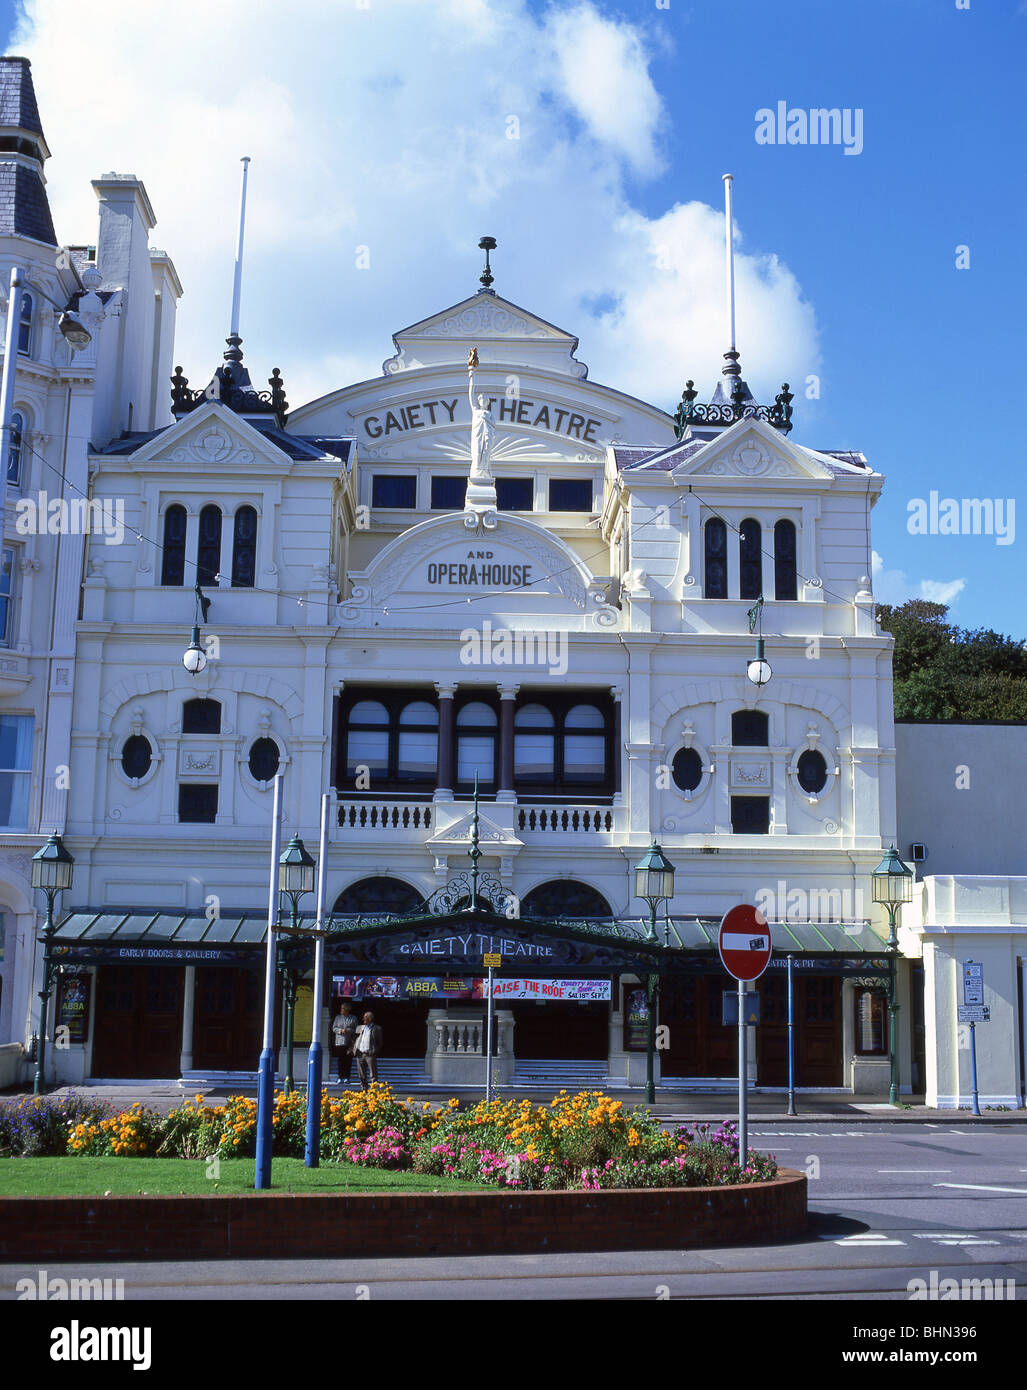 The Gaity Theatre facade, Harris Promenade, Douglas, Isle of Man Stock Photo